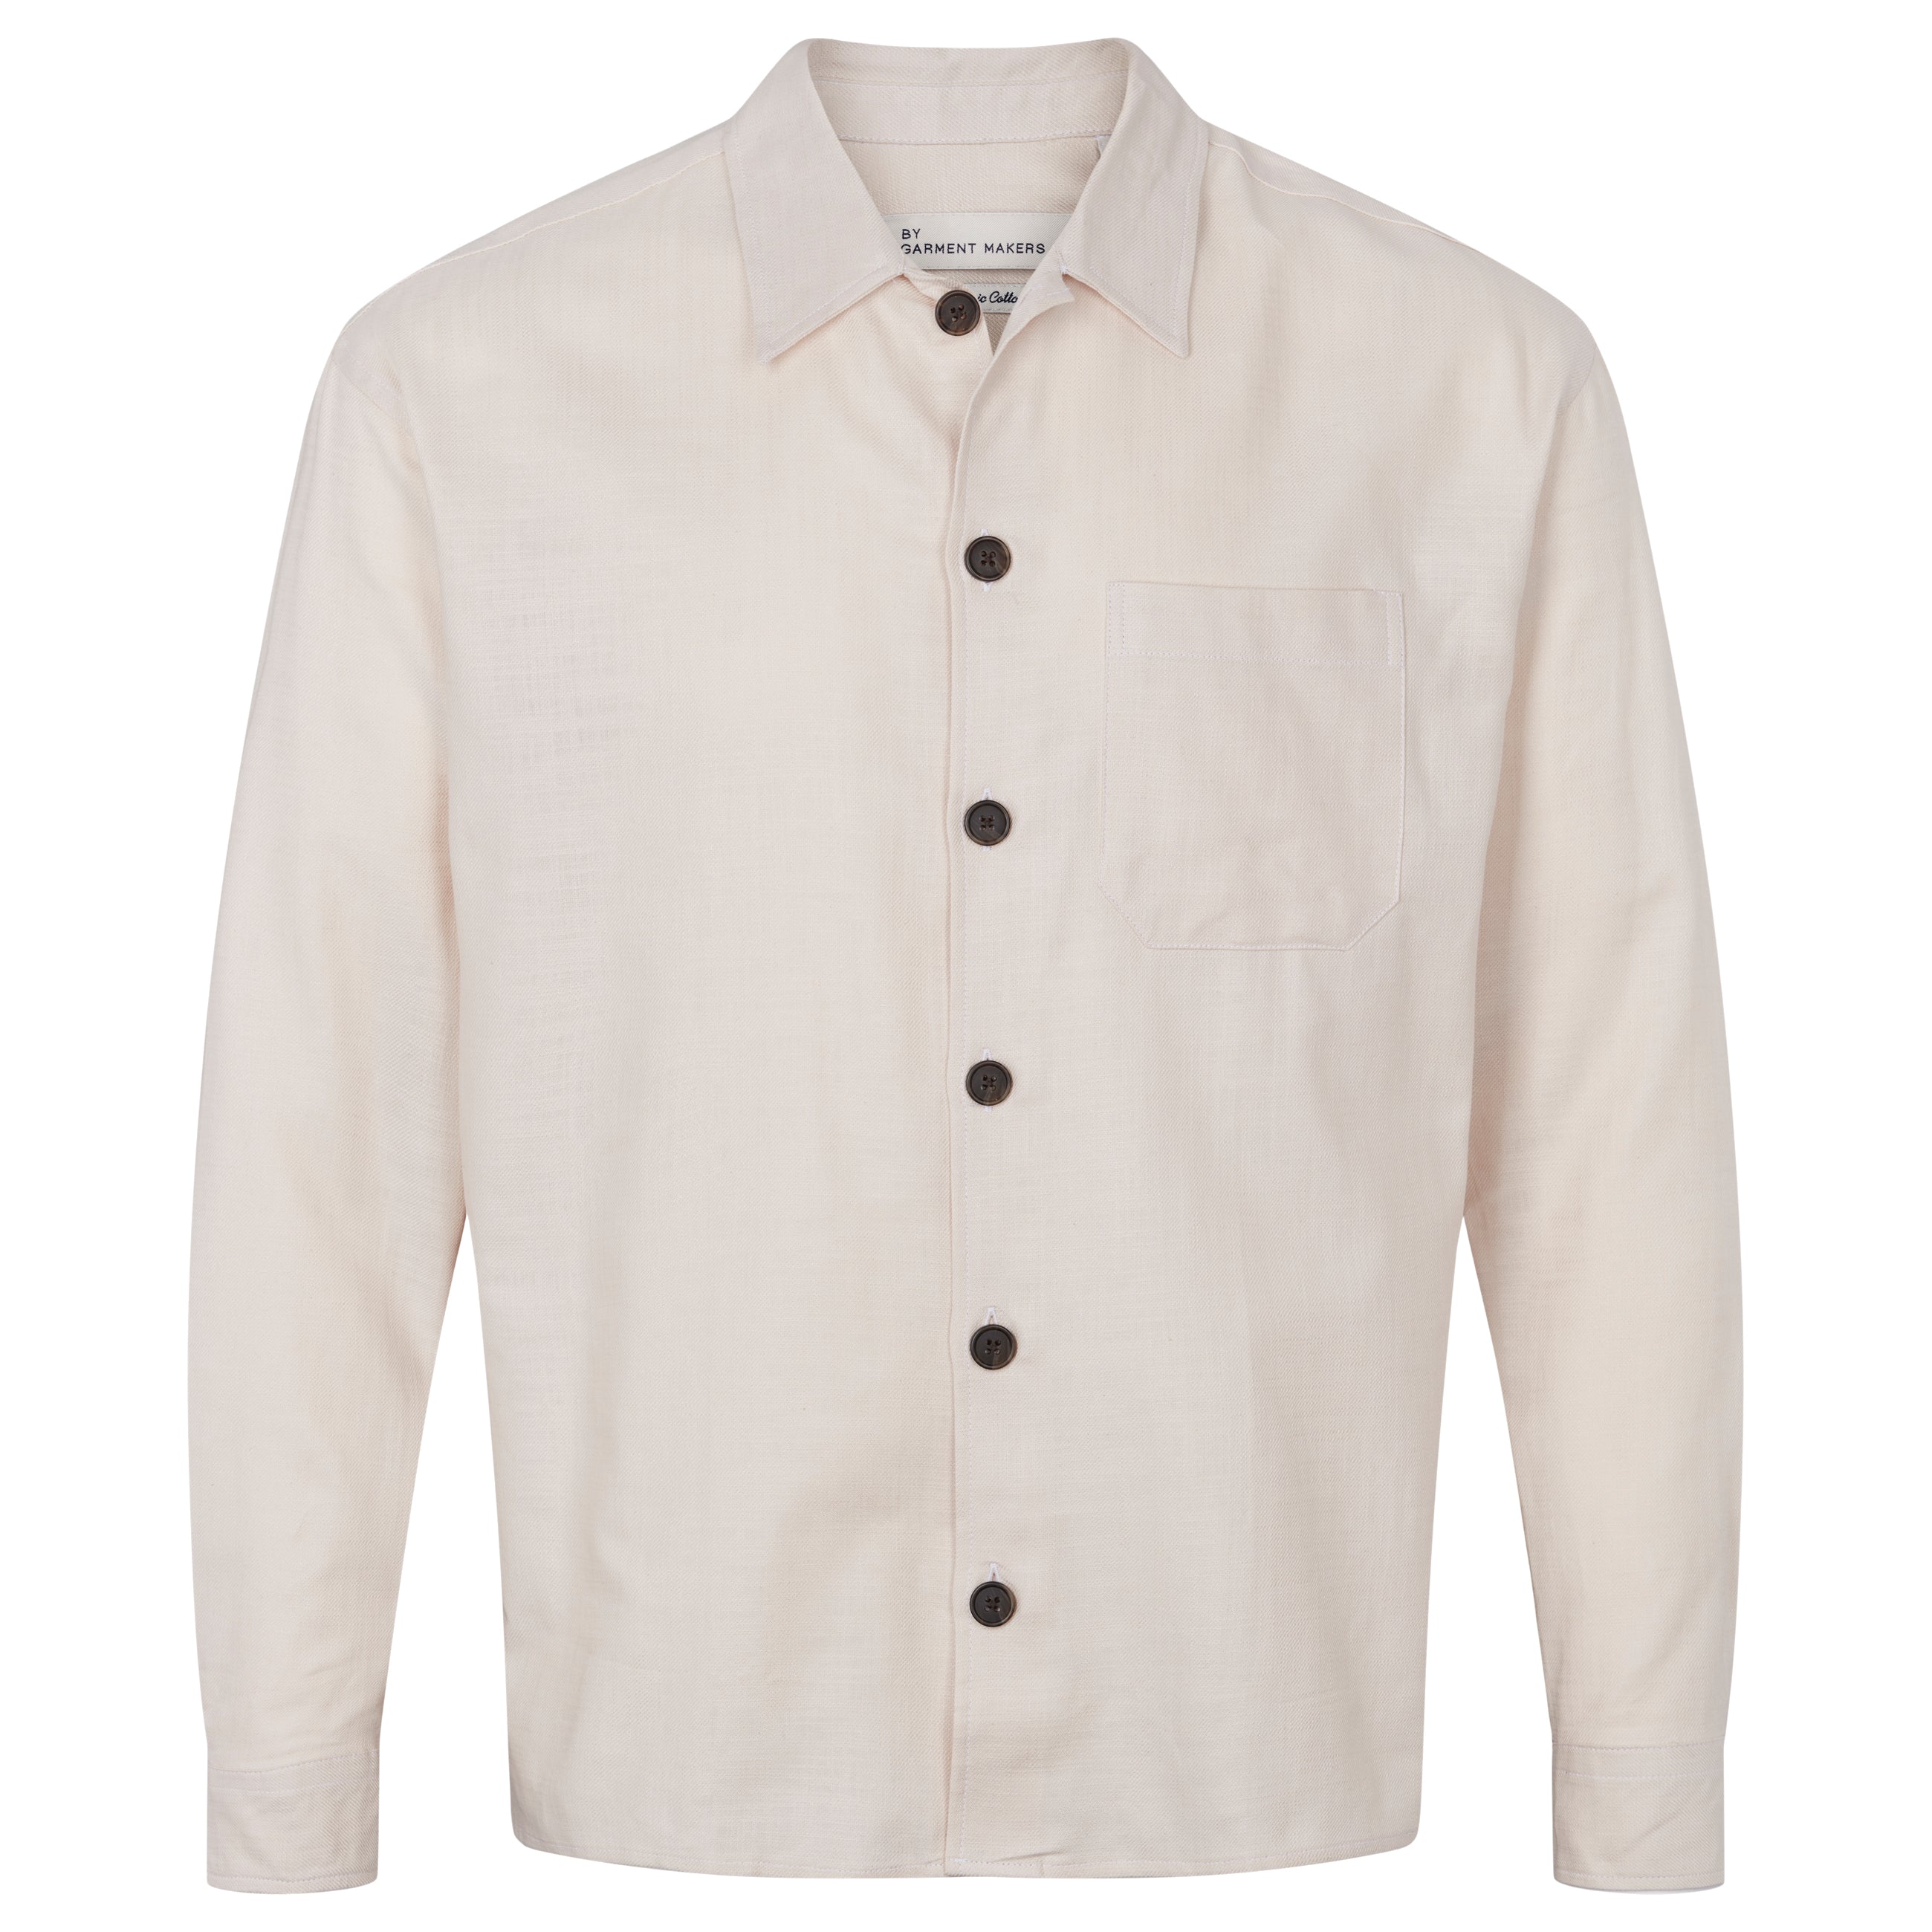 By Garment Makers Storm almindelig Overshirt skjorte LS 1130 Honesty